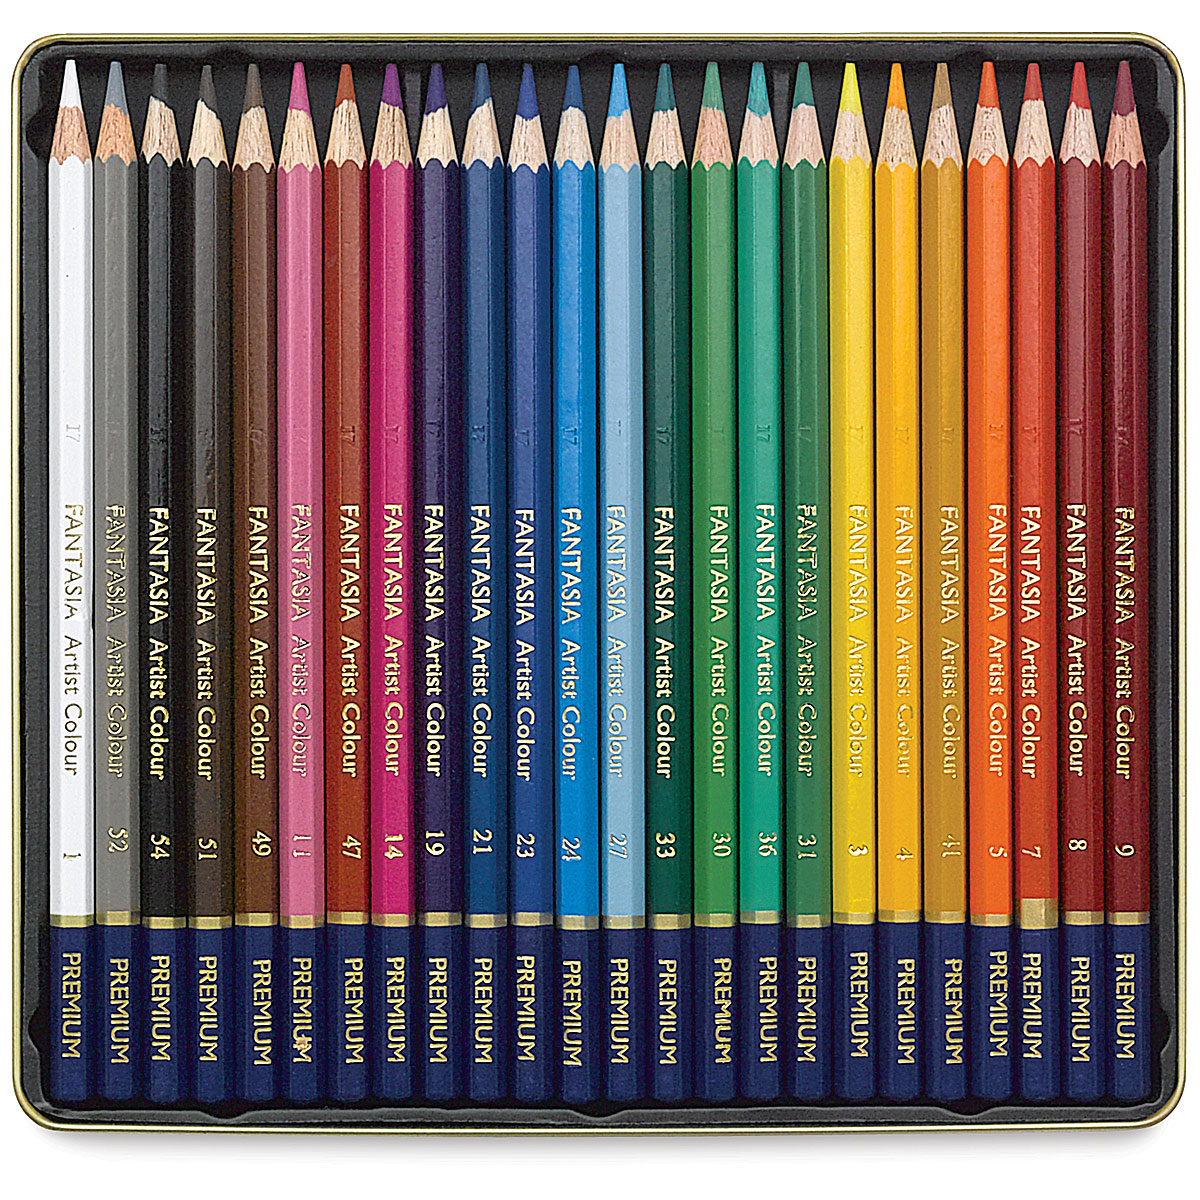 Studio Series Colored Pencil Set of 30 Premium Colored Pencils New